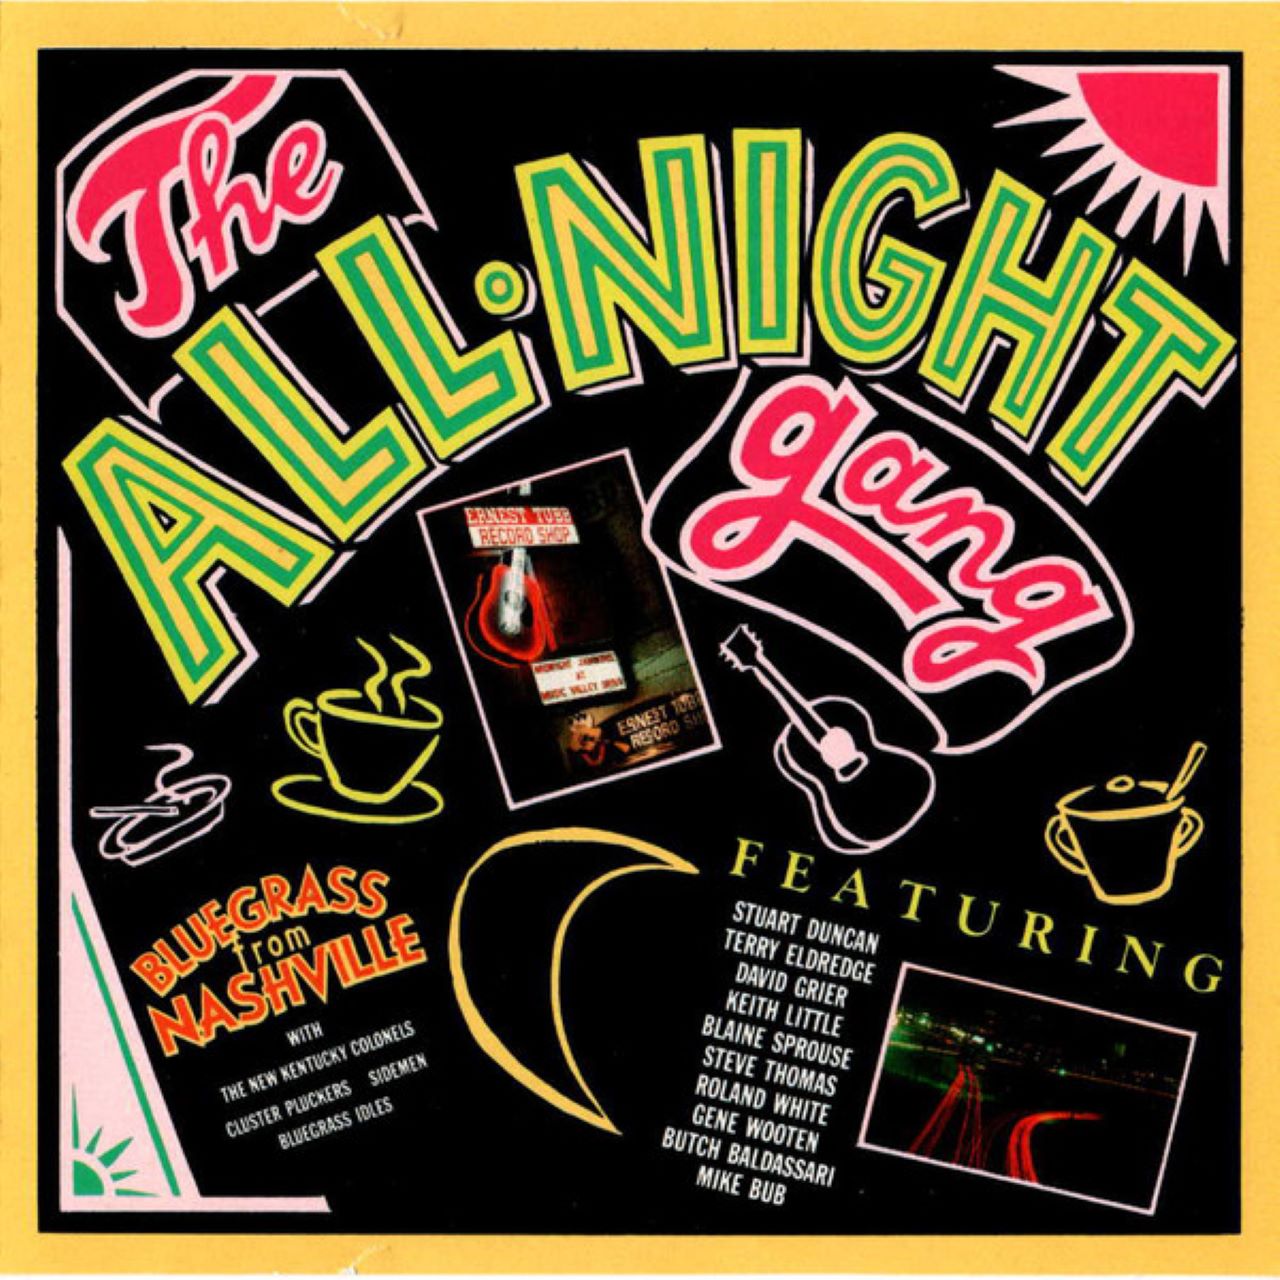 All-Night Gang - Bluegrass From Nashville cover album